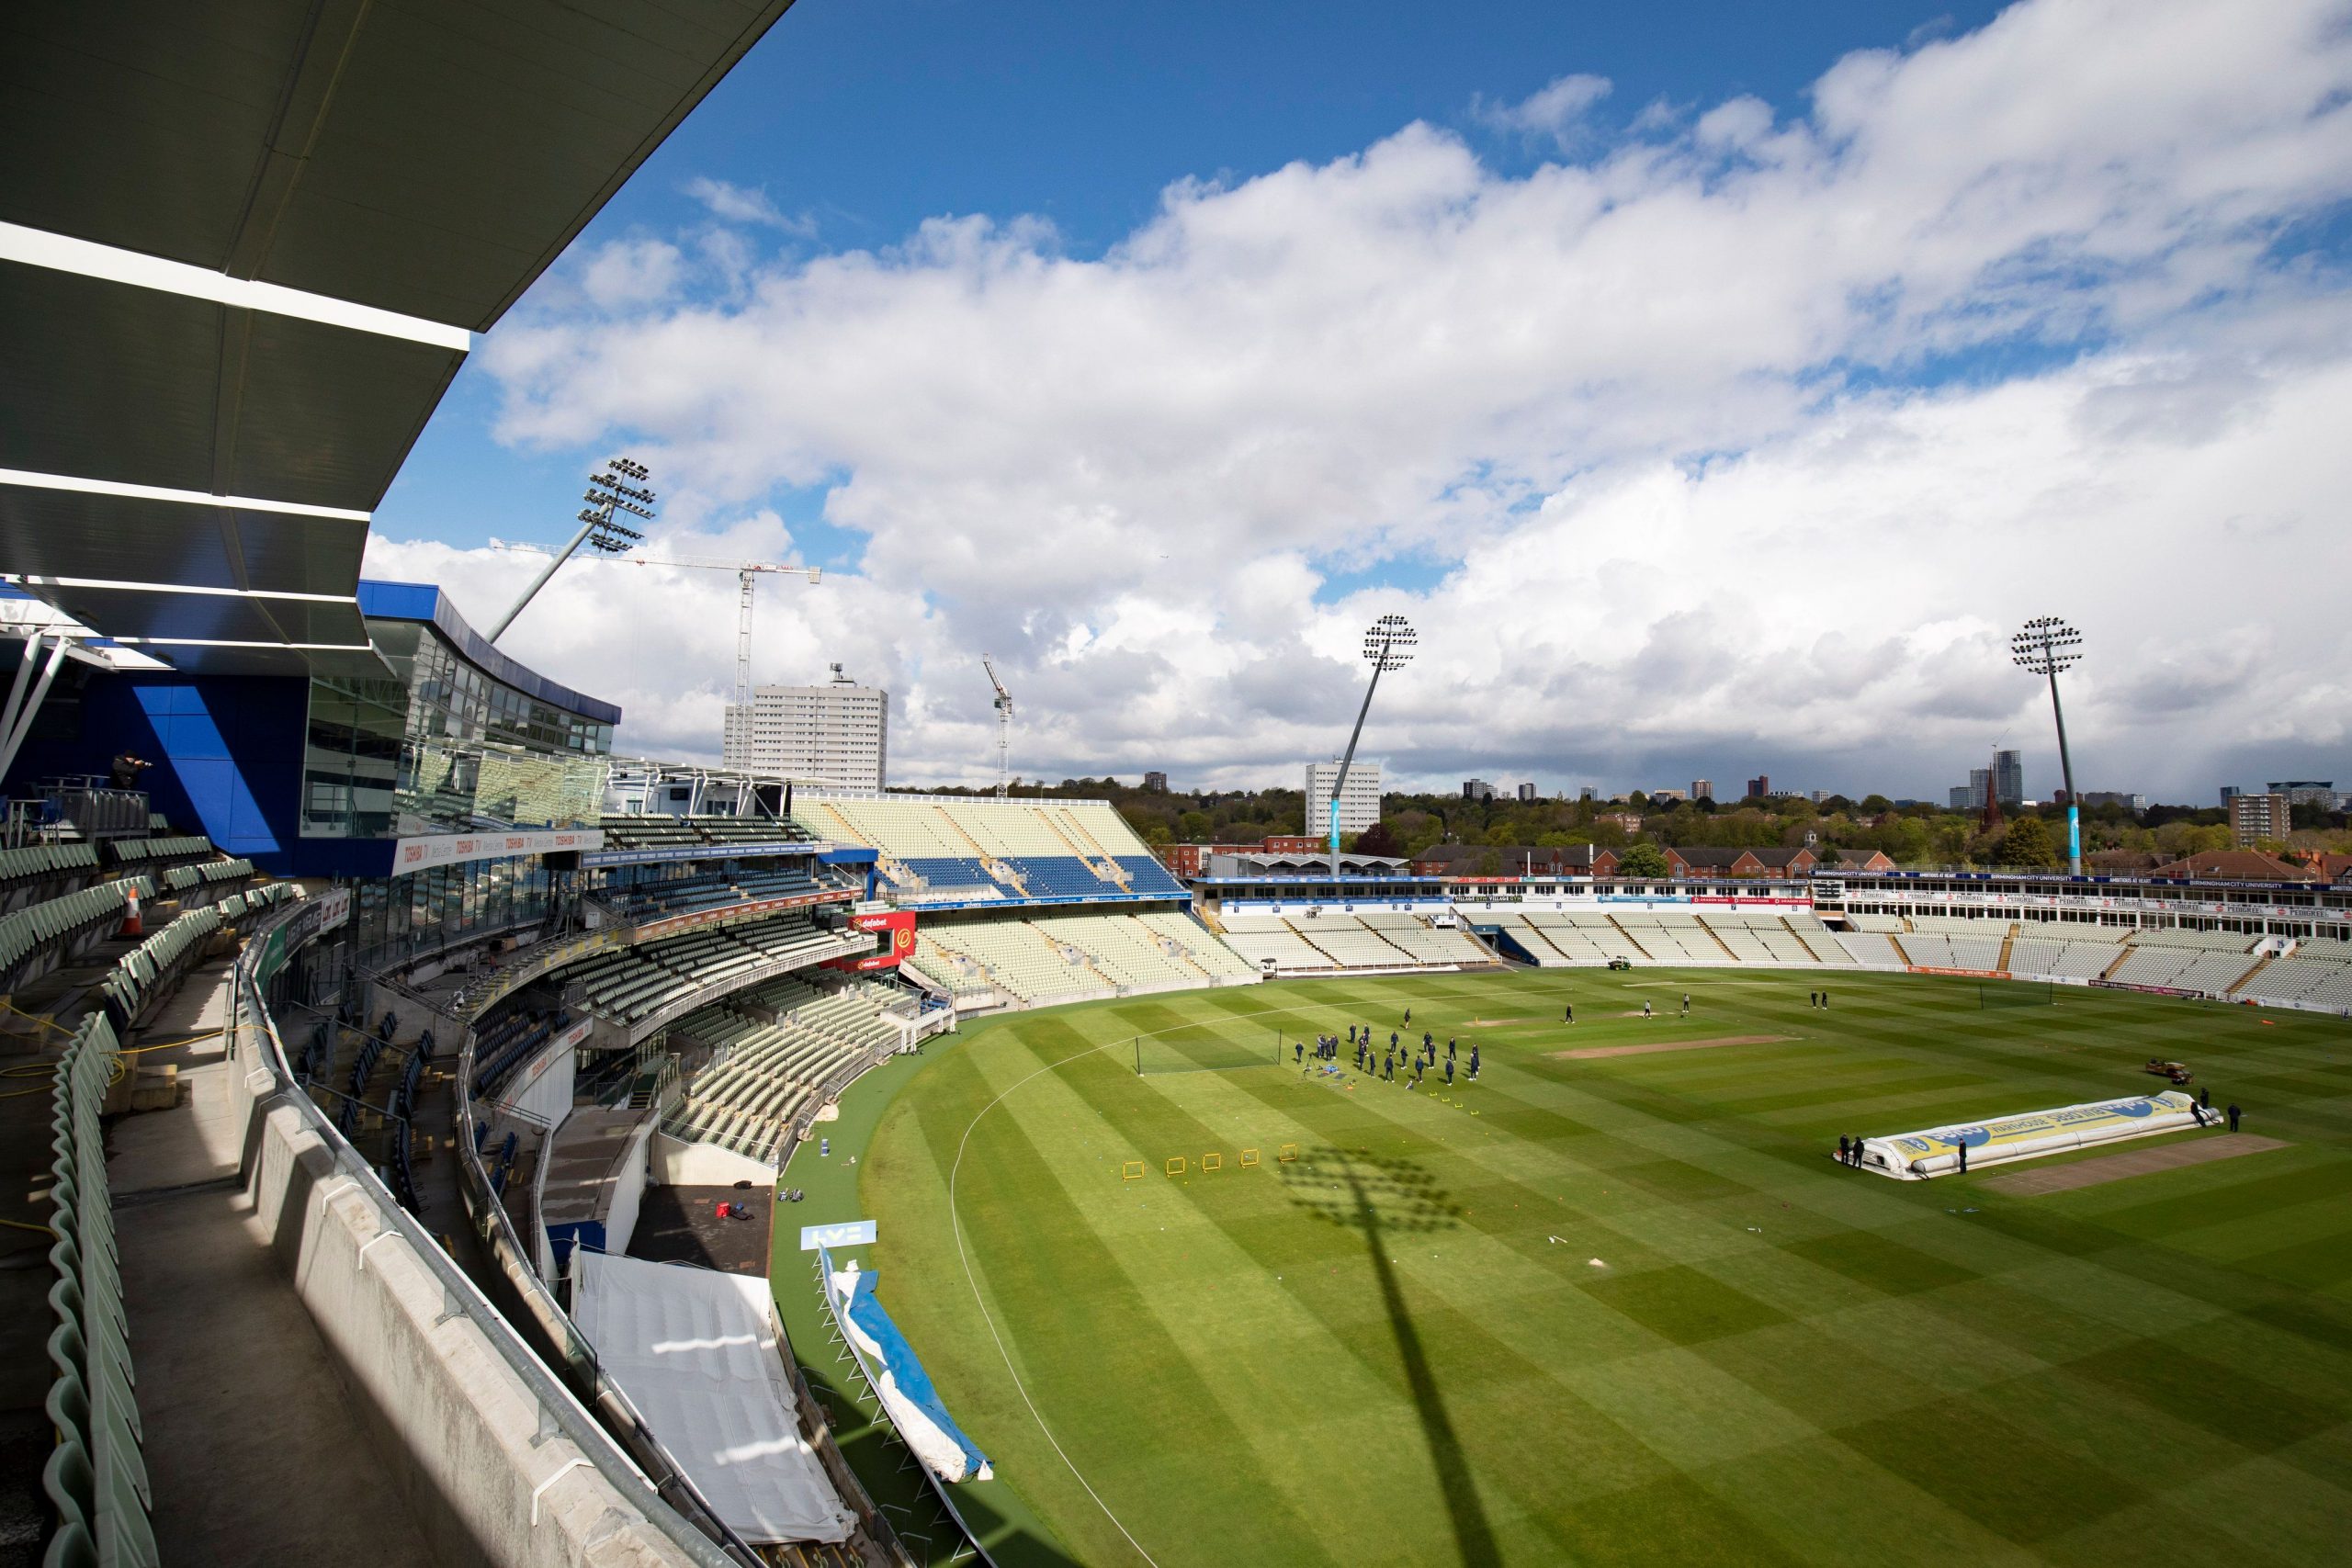 18,000 fans can attend England vs New Zealand Edgbaston Test